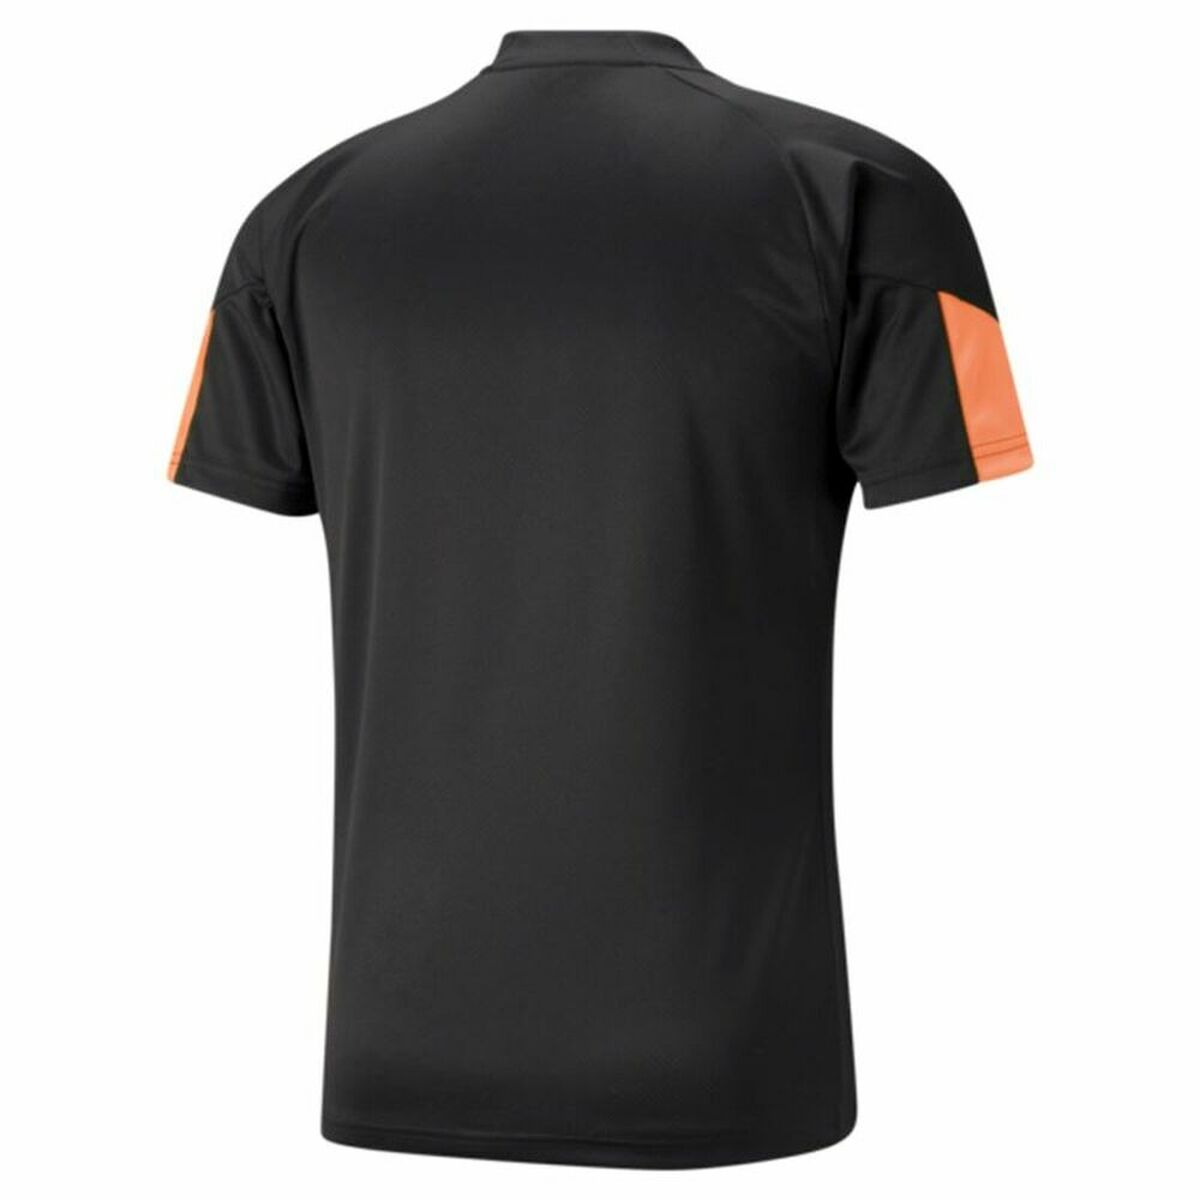 Kurzärmiges Fußball T-Shirt für Männer Puma Individual Final